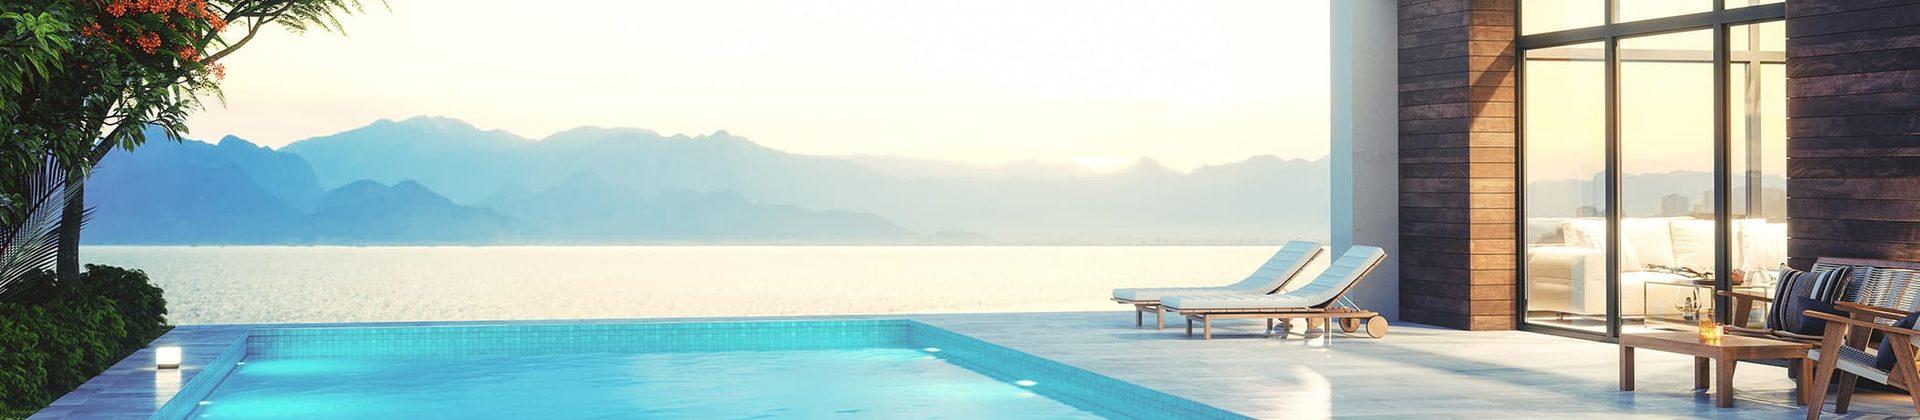 Ferienhaus mit Pool auf Korfu - TUI